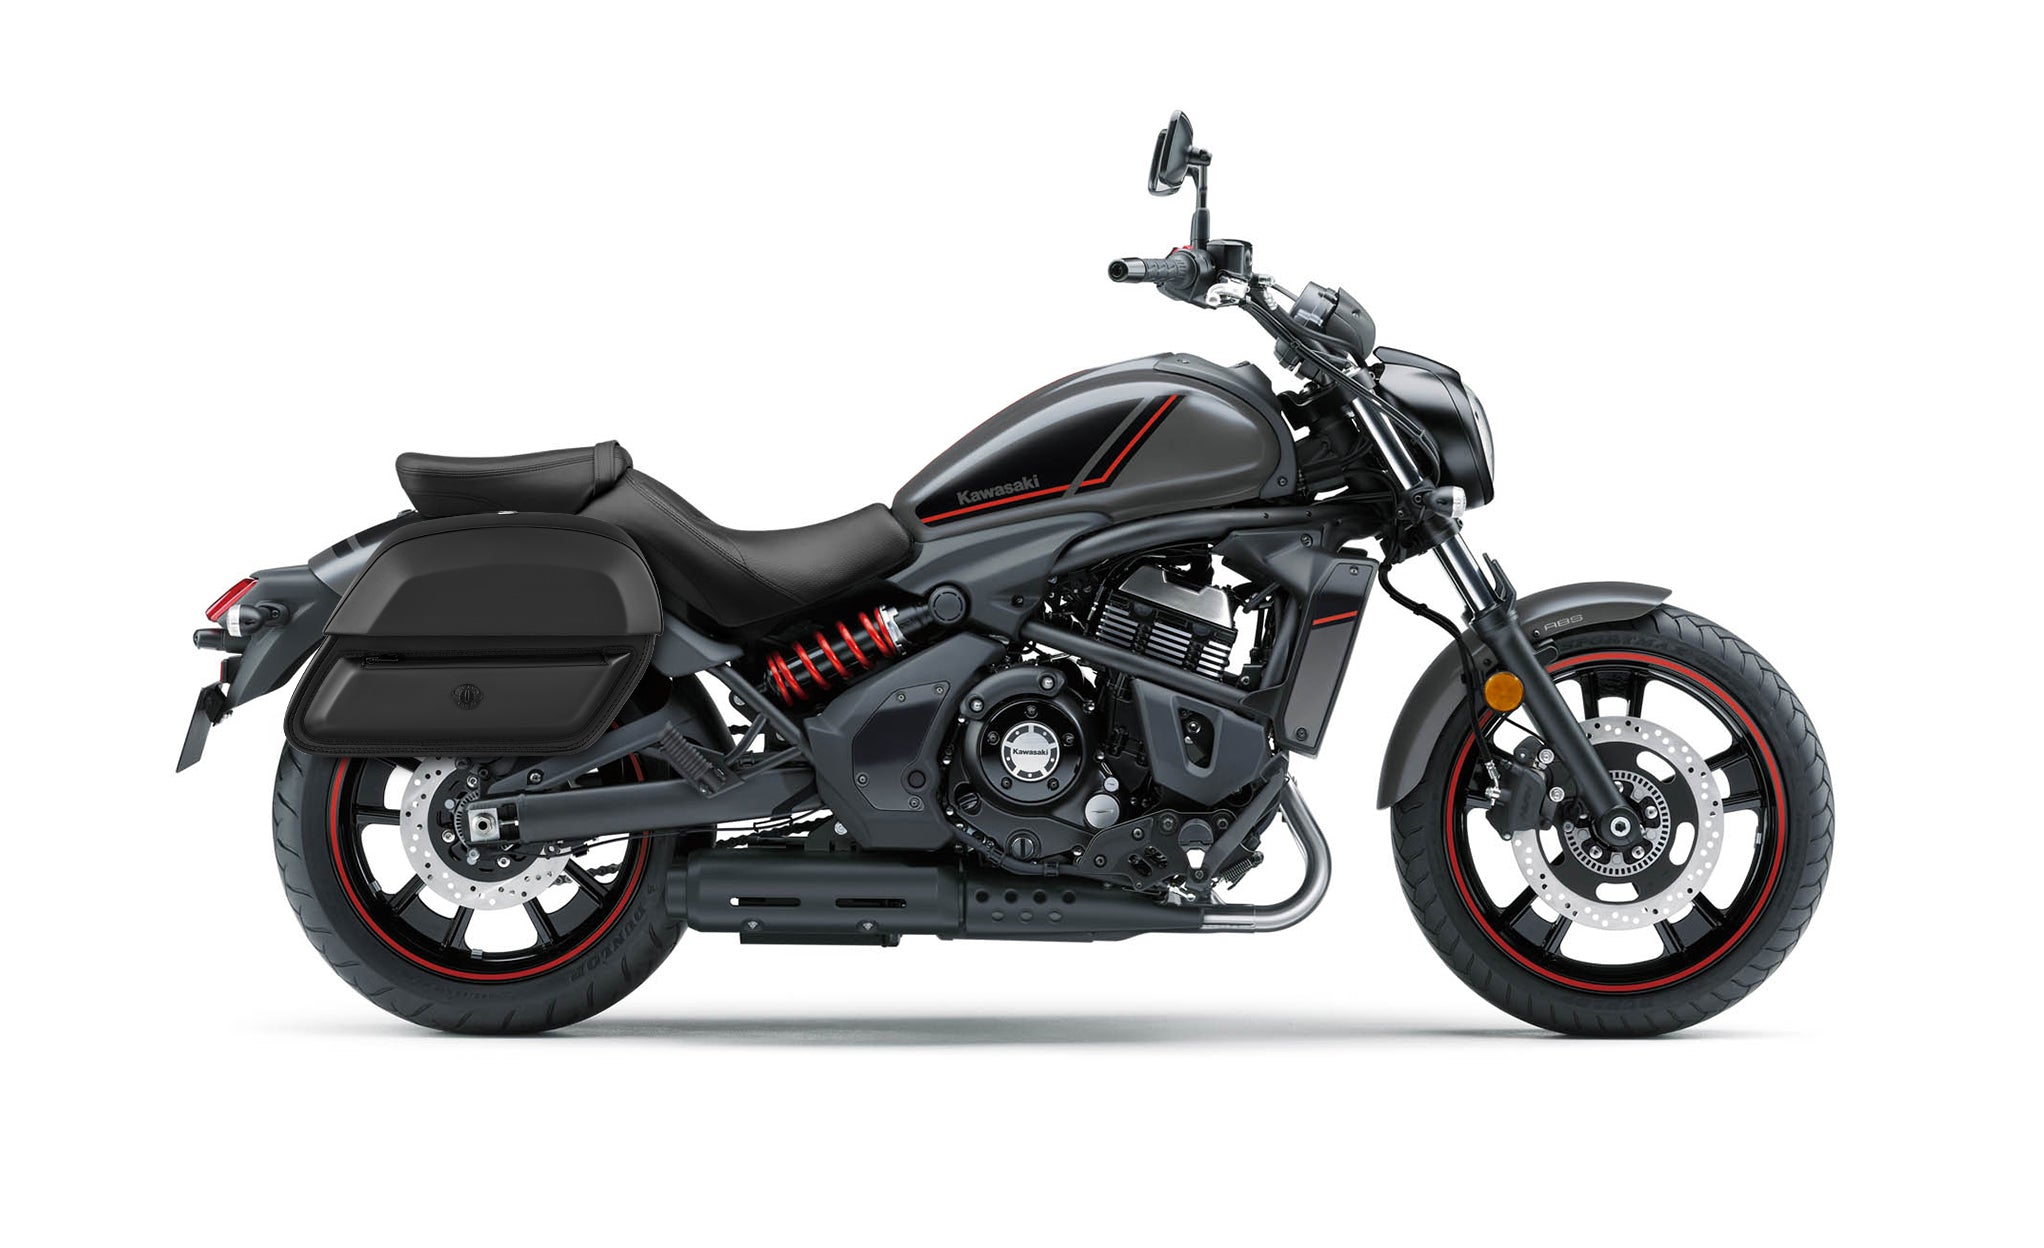 28L - Wraith Medium Kawasaki Vulcan S VN650 Leather Motorcycle Saddlebags BAG on Bike View @expand